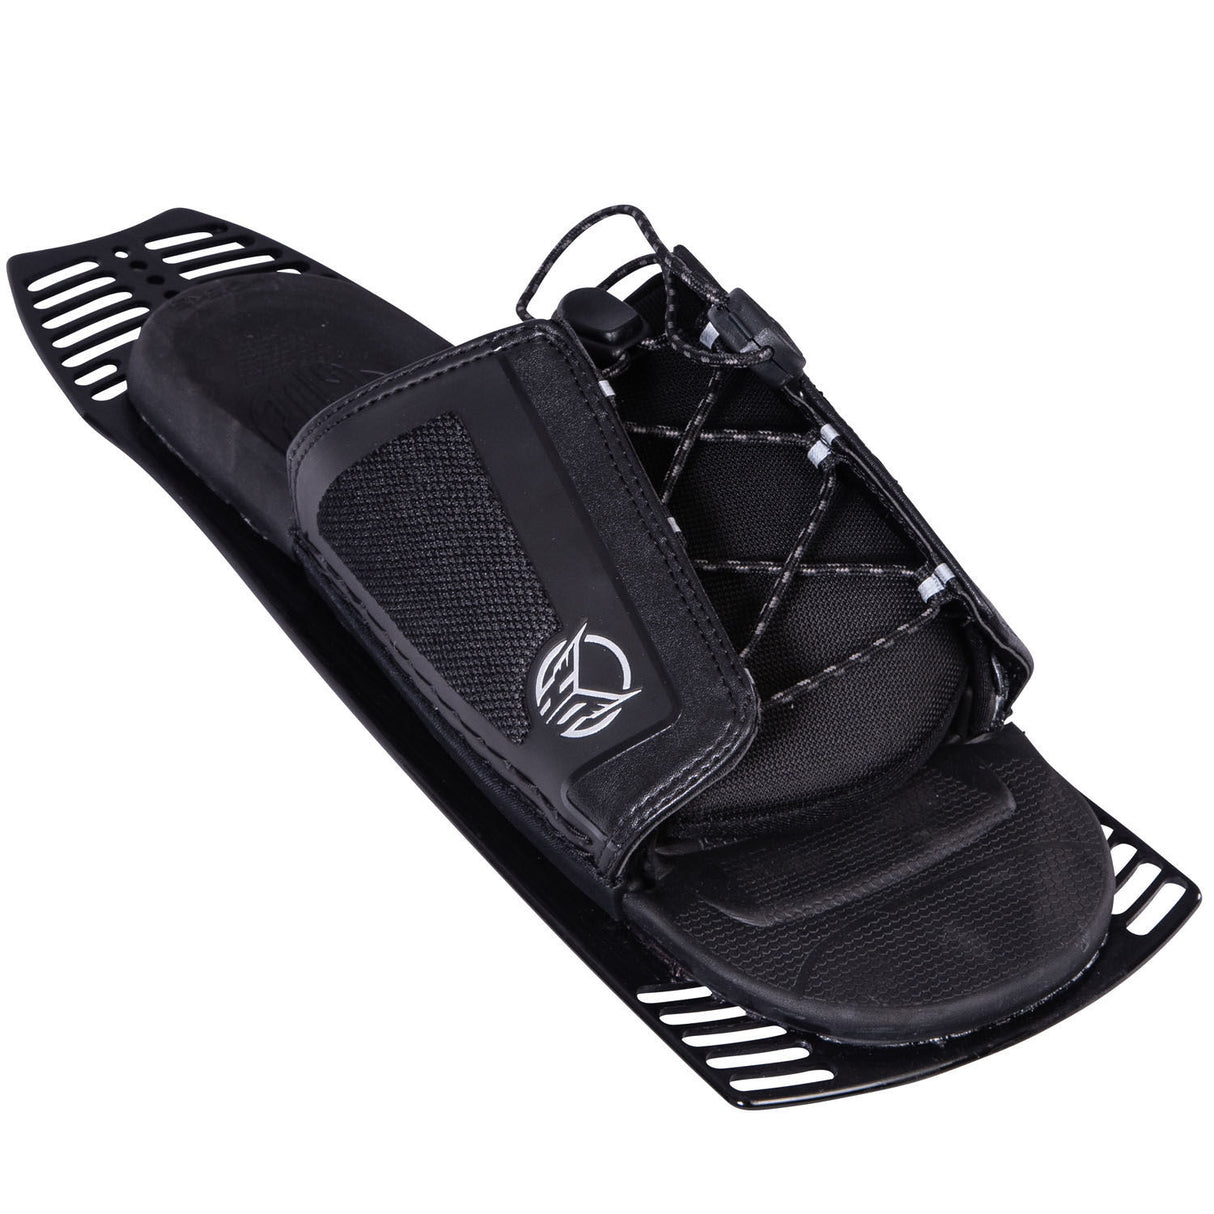 HO Stance Adjustable Rear Toe Plate Water Ski Binding